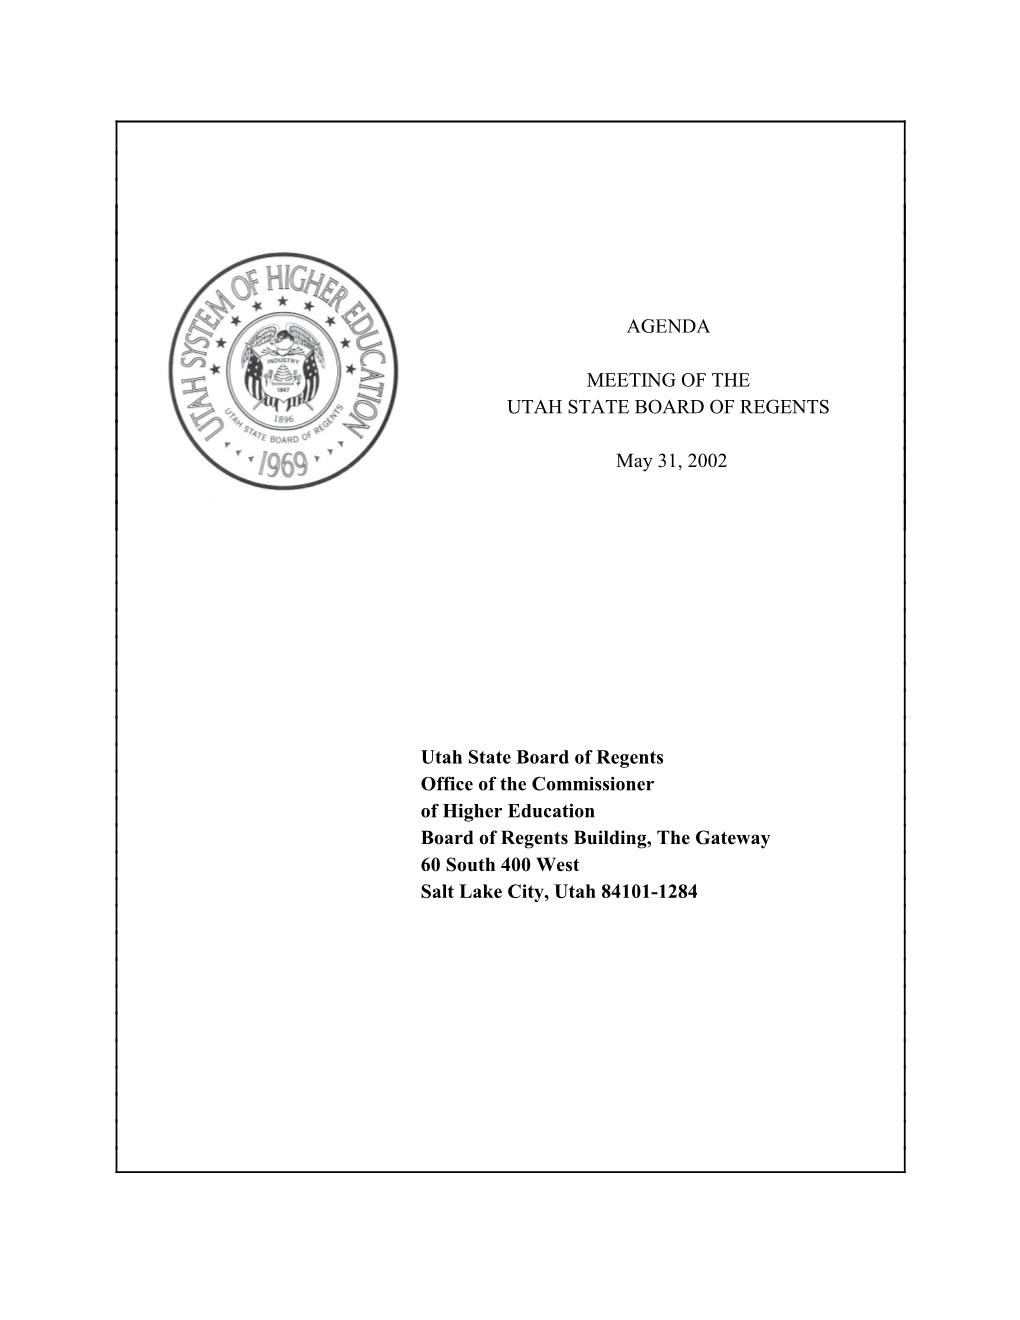 Sbr 2002-05-31 Agend